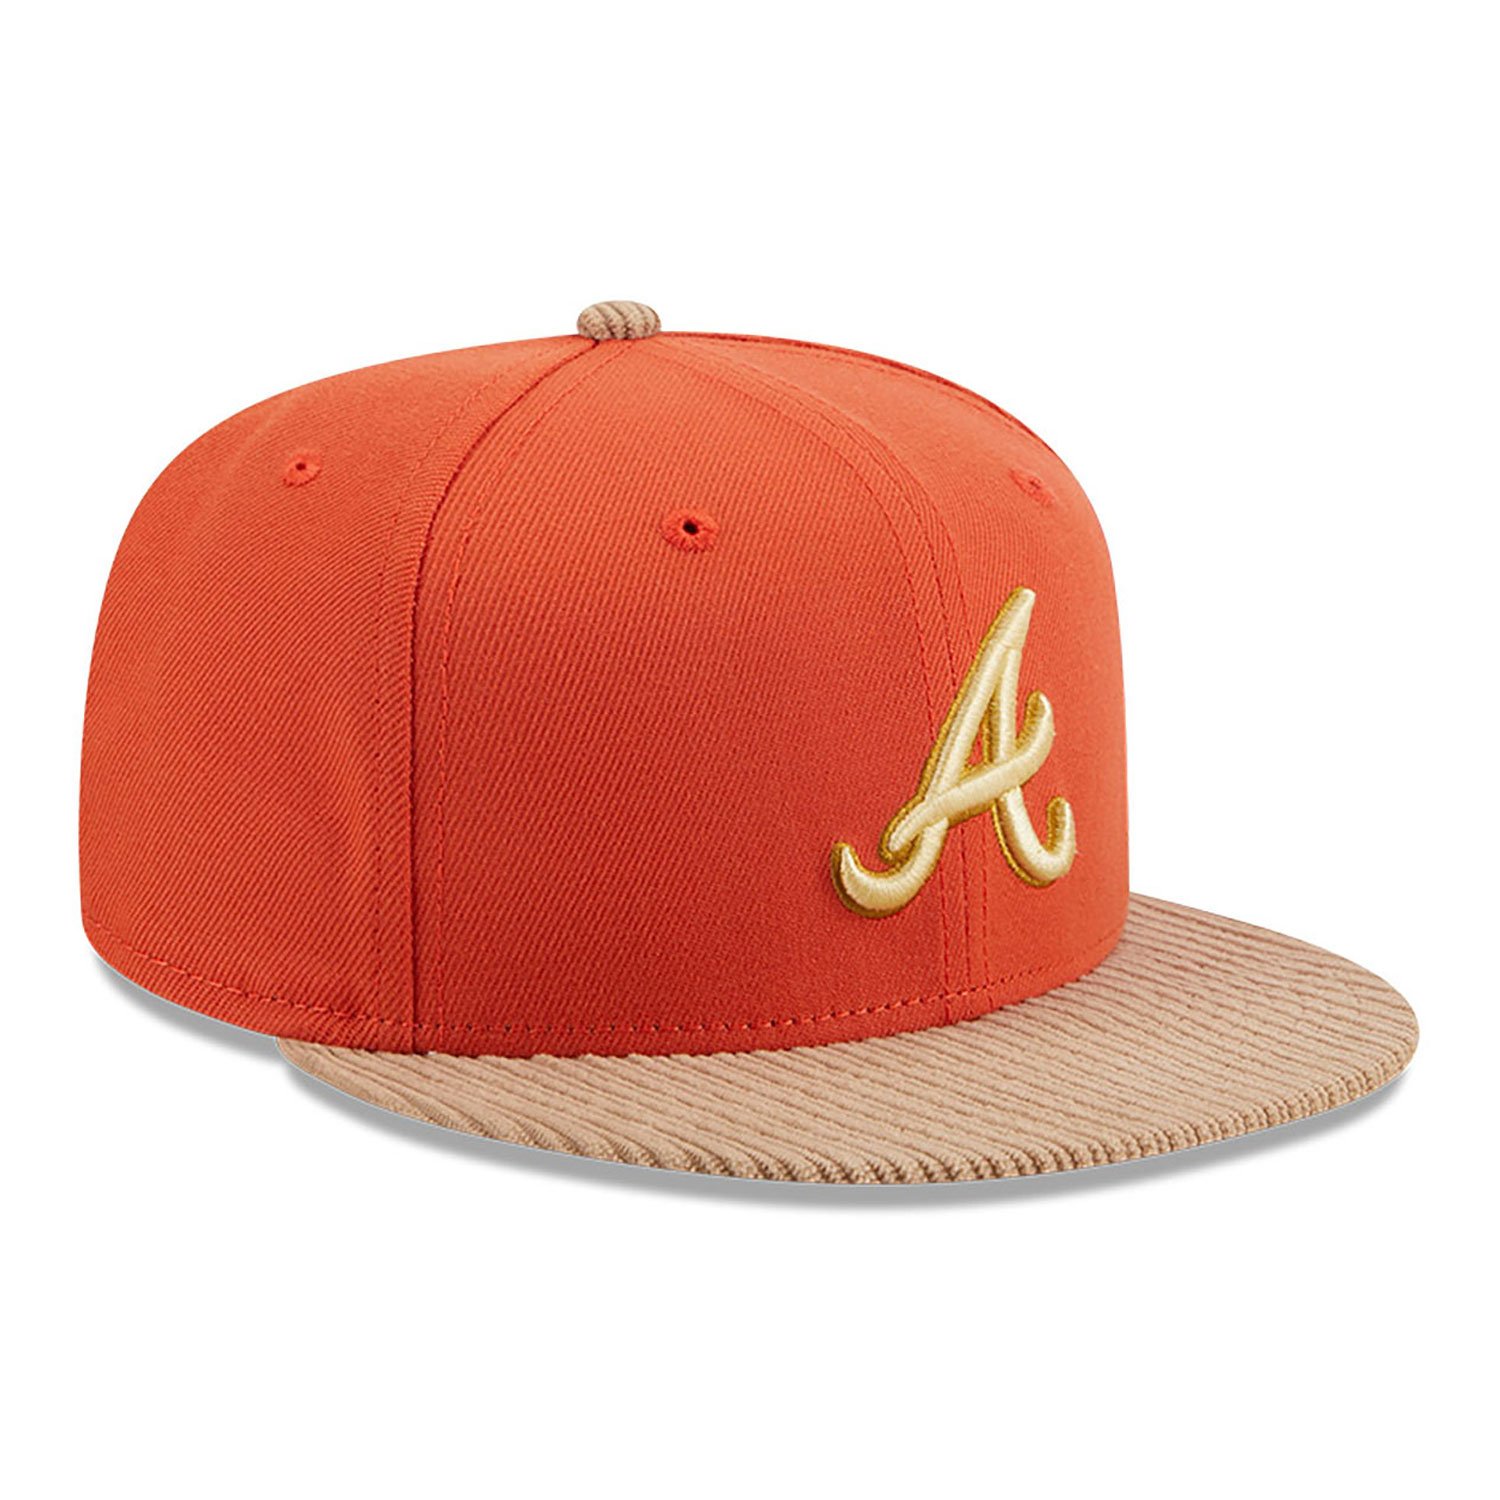 Atlanta Braves MLB Autumn Wheat Dark Orange 9FIFTY Snapback Cap